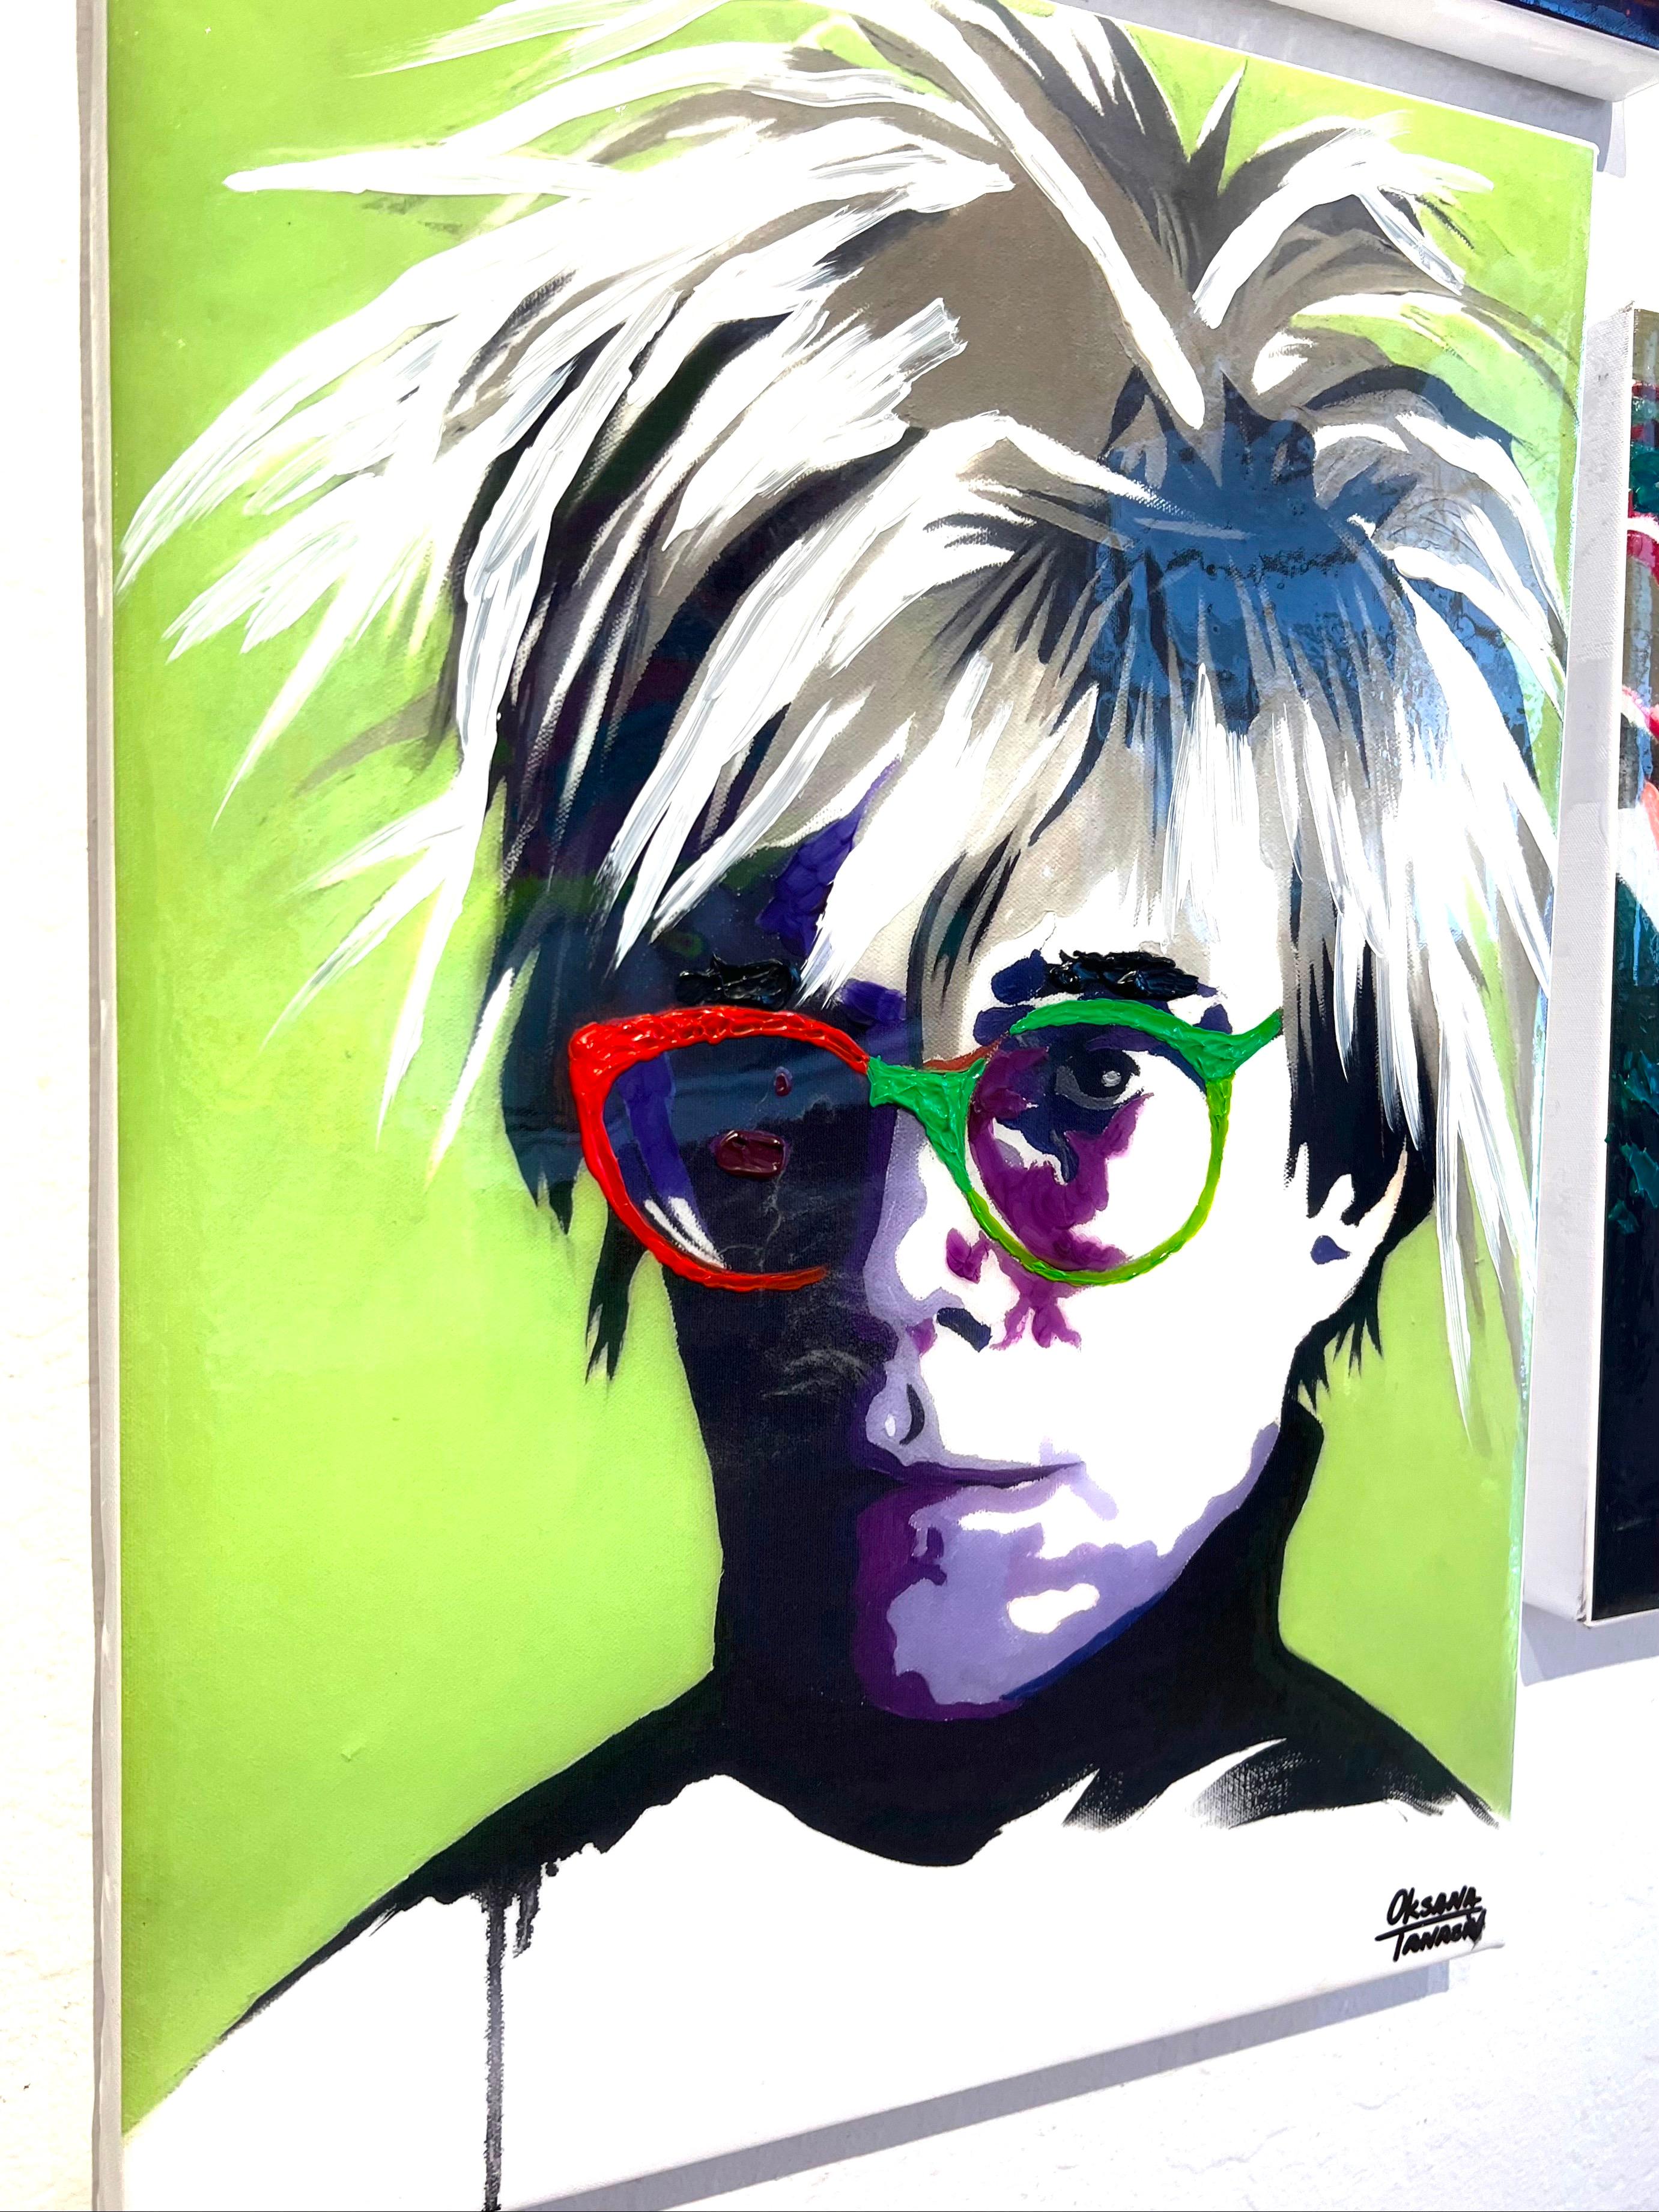 Andy Warhol. Portraits de célébrités, Pop-art. - Print de Oksana Tanasiv